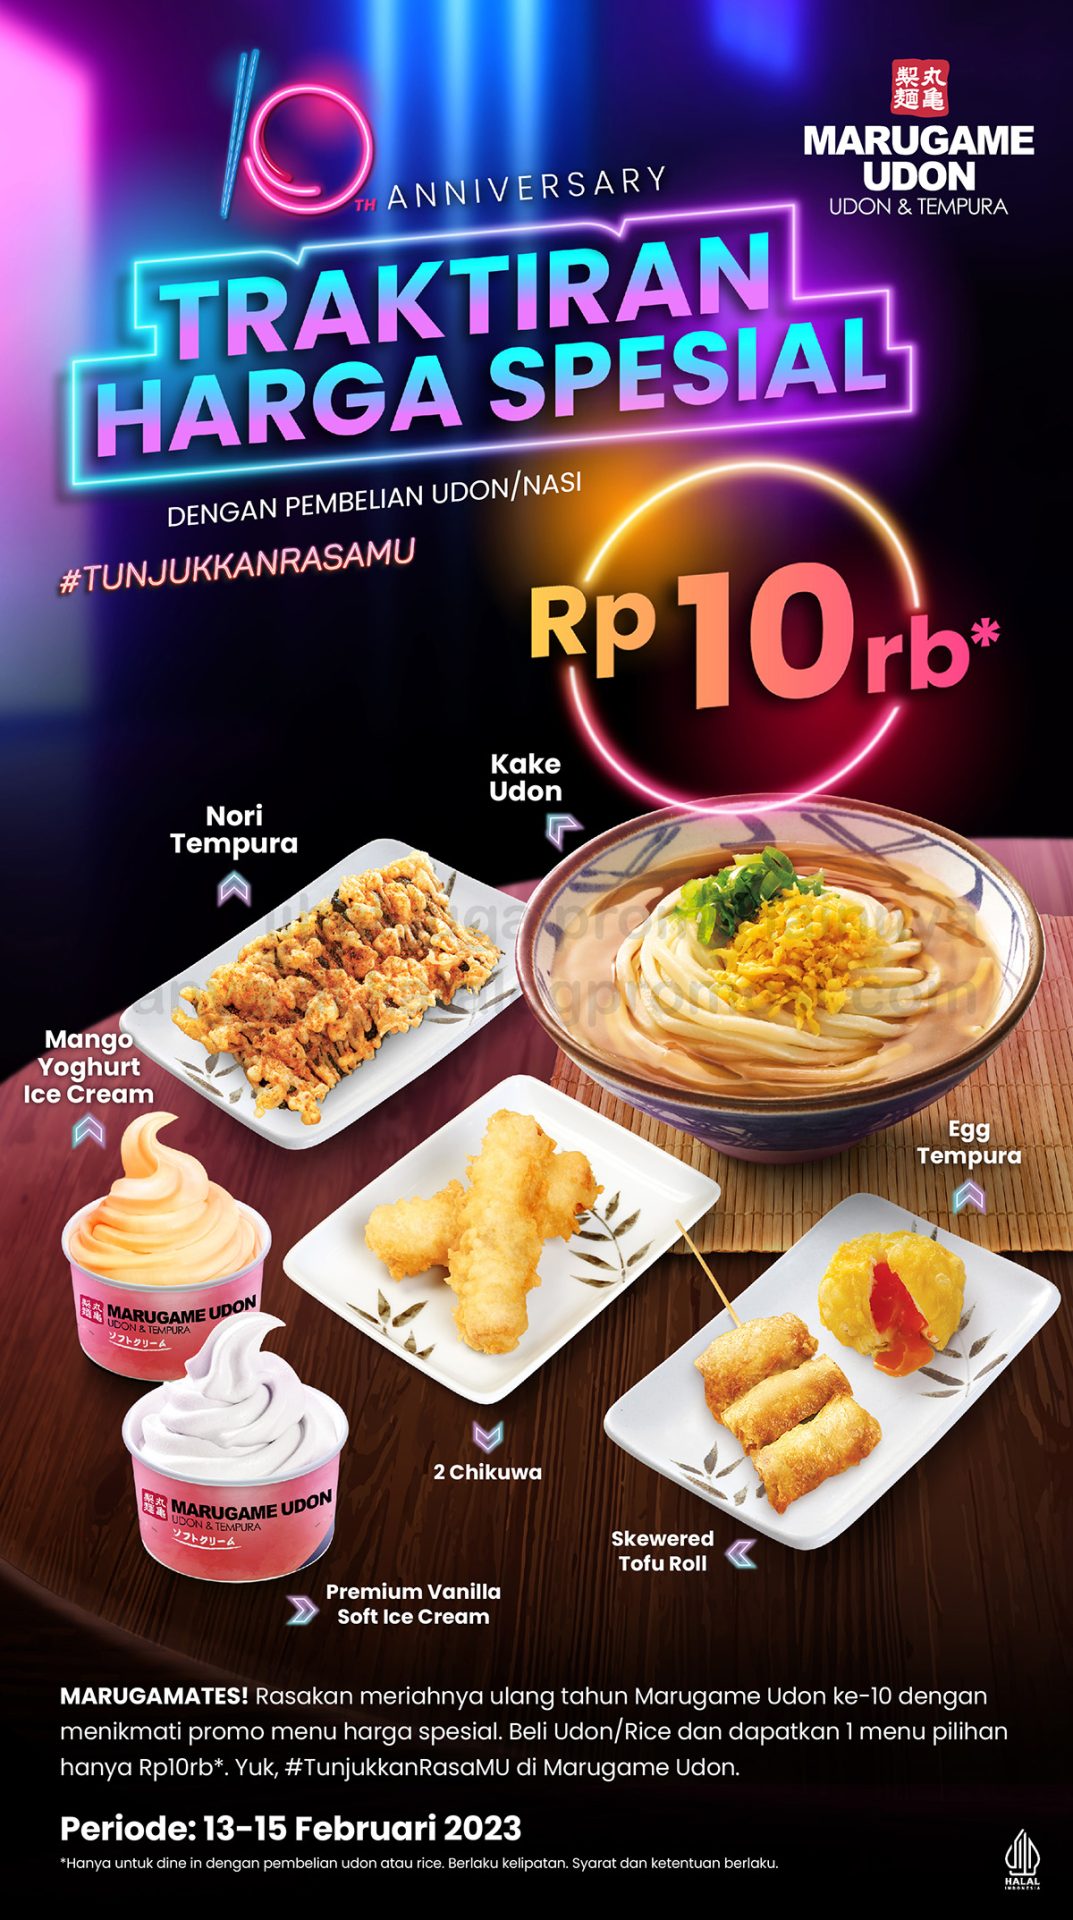 Promo Marugame Udon Spesial ANNIVERSARY  - Harga Spesial menu pilihan cuma Rp 10.000